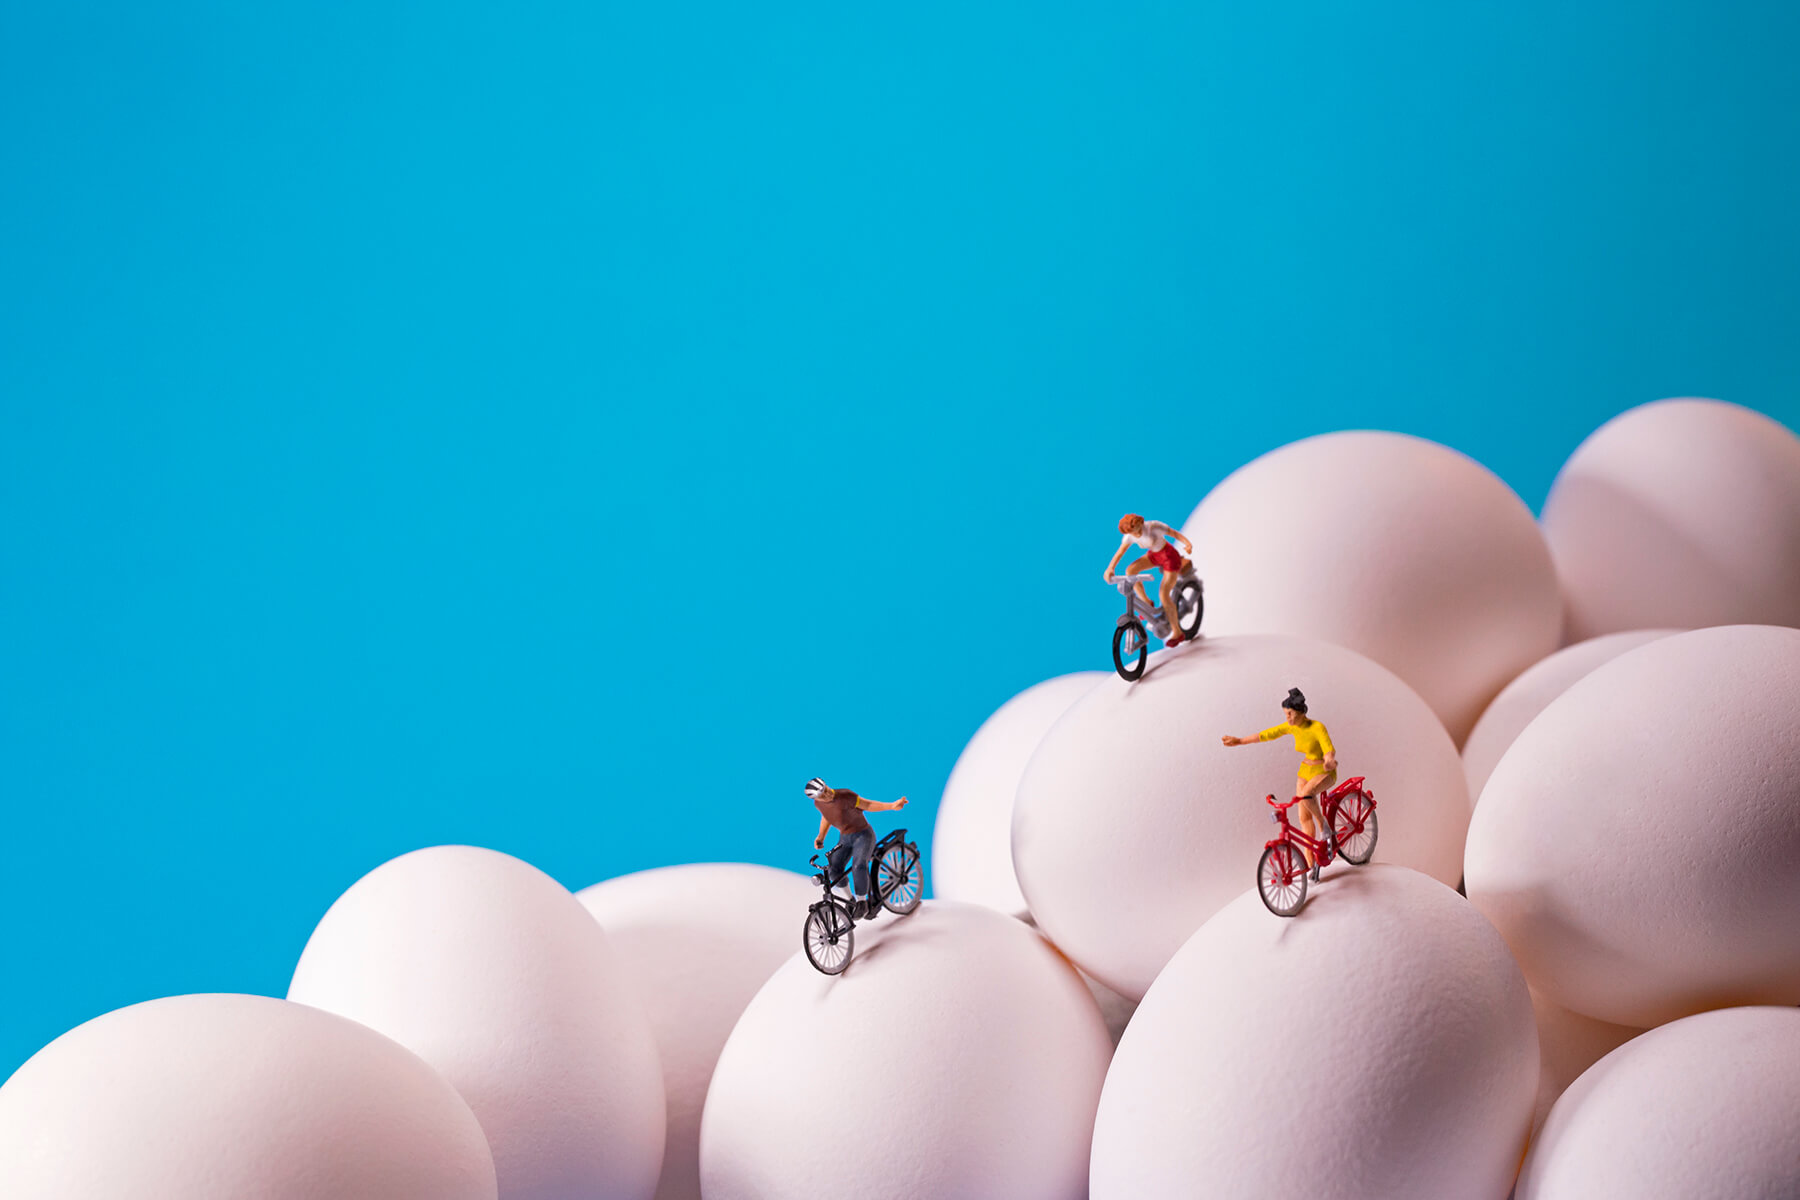 Image of Egg Bikes